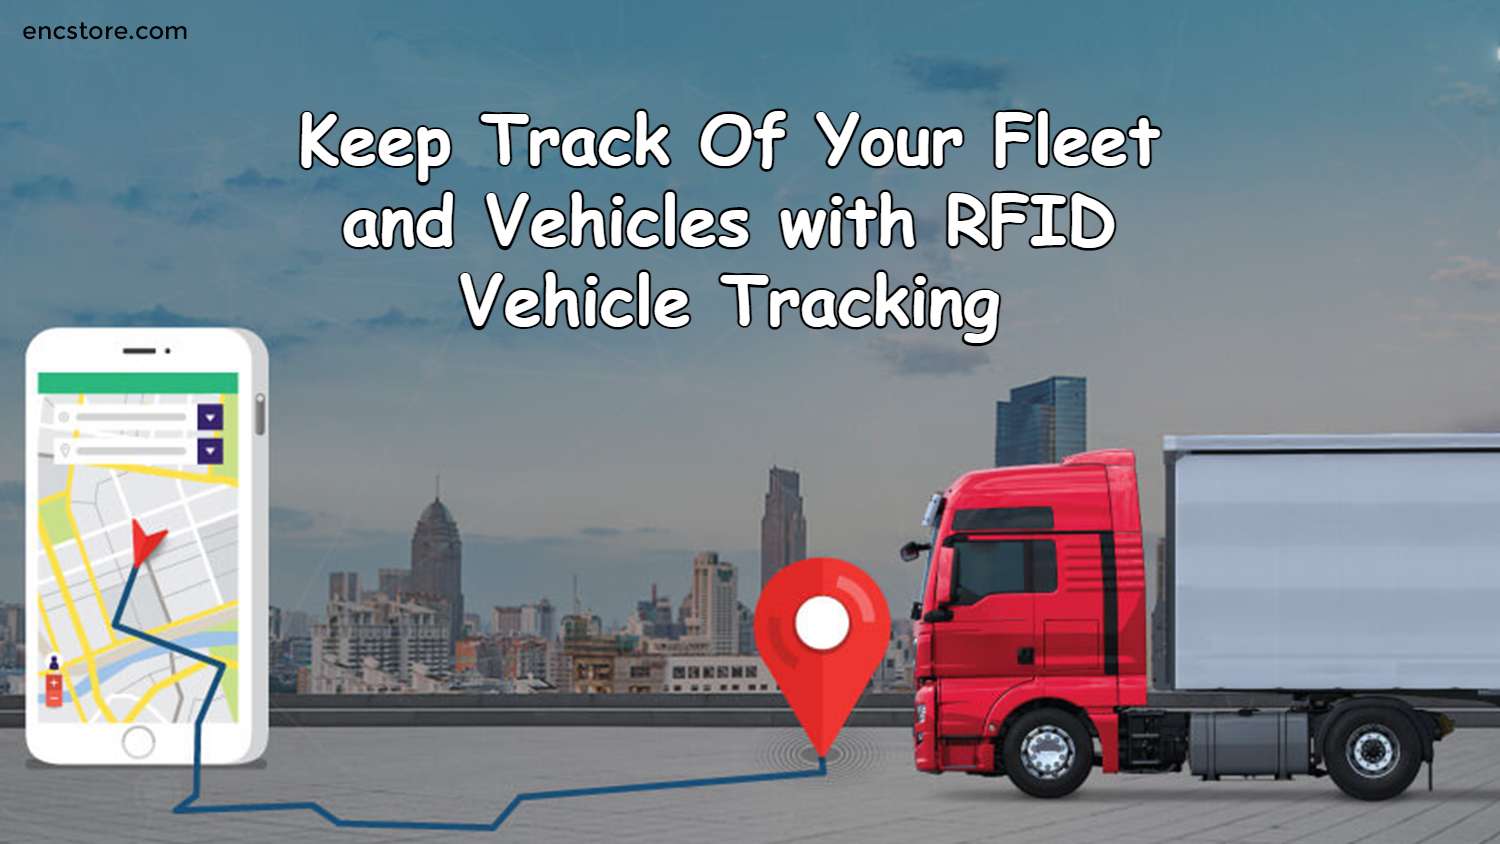 RFID Vehicle Tracking